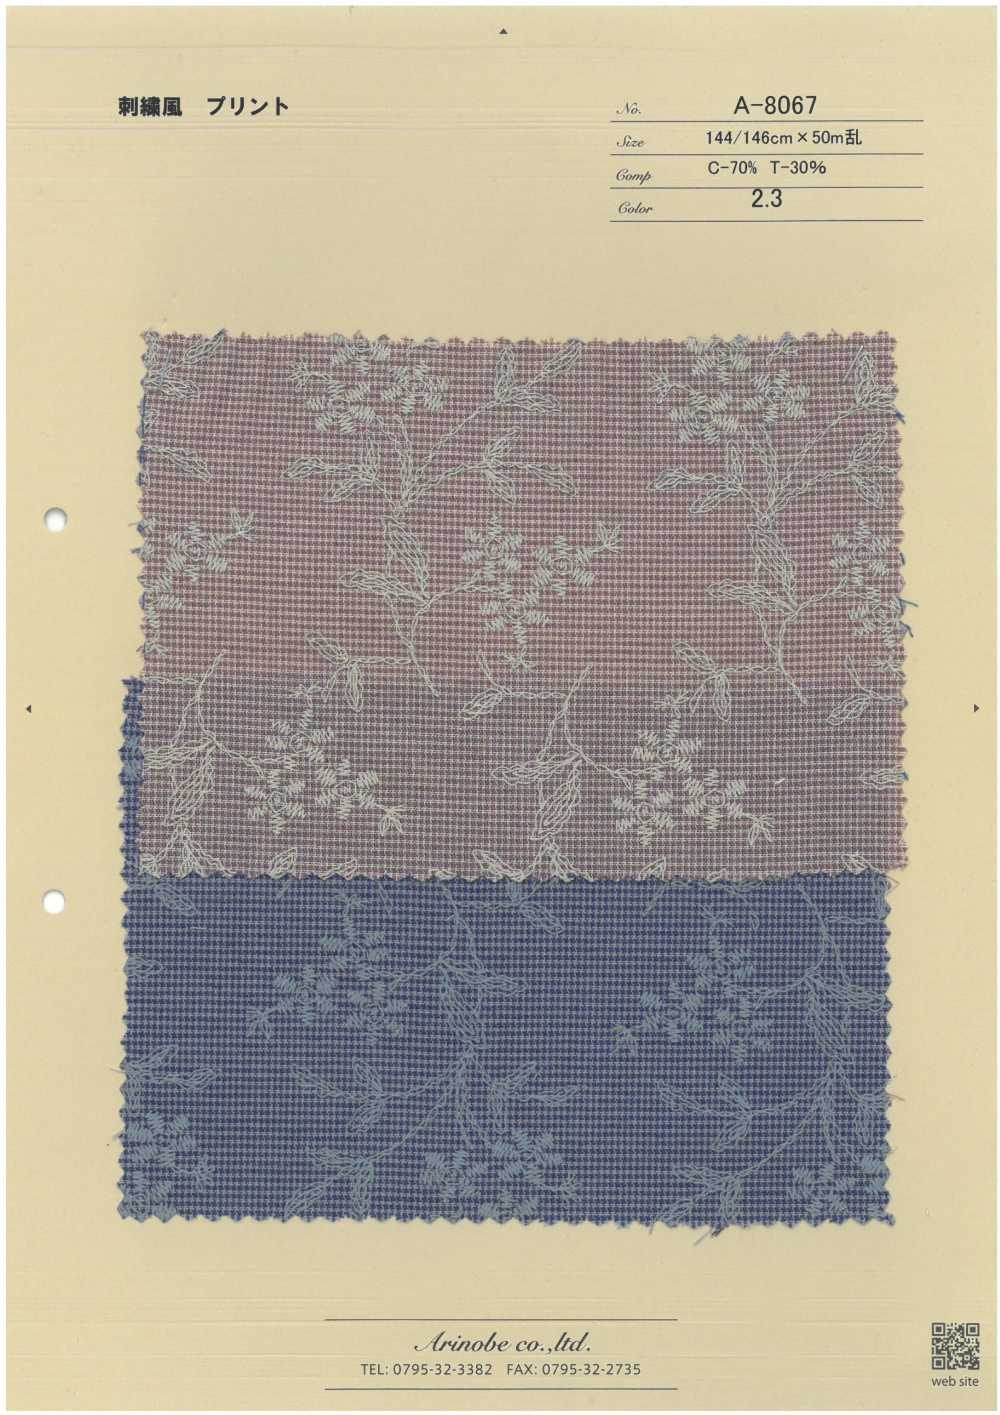 A-8067 Embroidery Style Print[Textile / Fabric] ARINOBE CO., LTD.